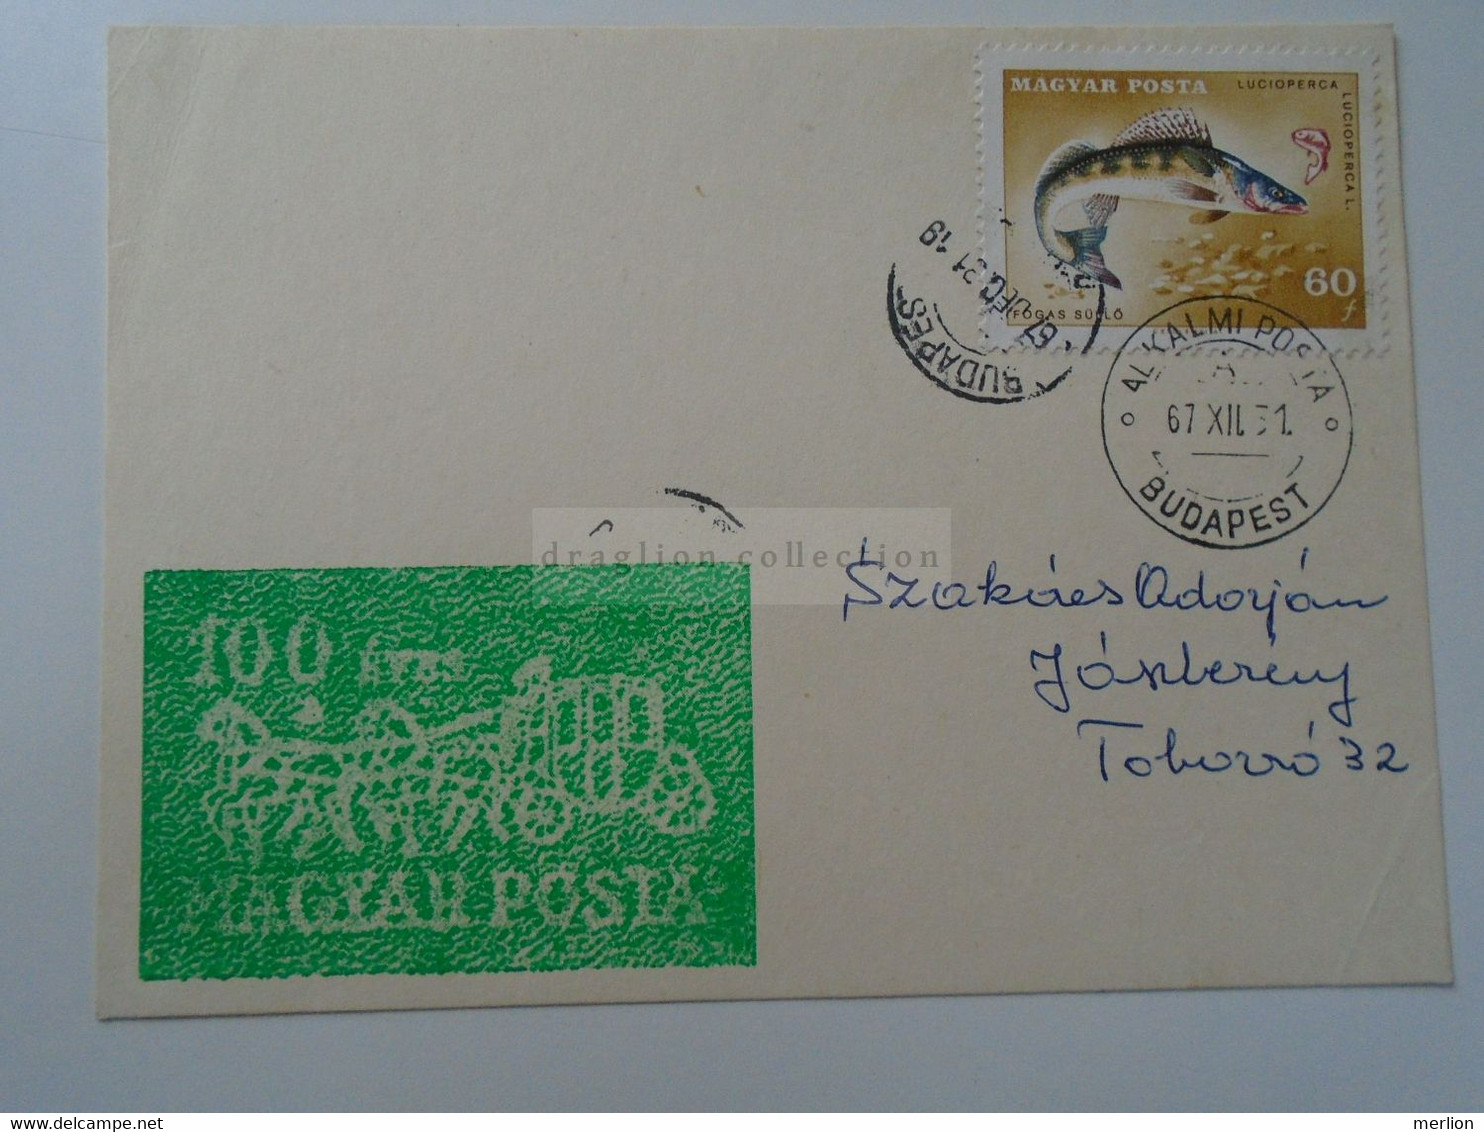 D187068  HUNGARY  Postmark     MAGYAR POSTA   - Hungarian Post - 1967 Alkalmi Posta  Budapest - Postmark Collection